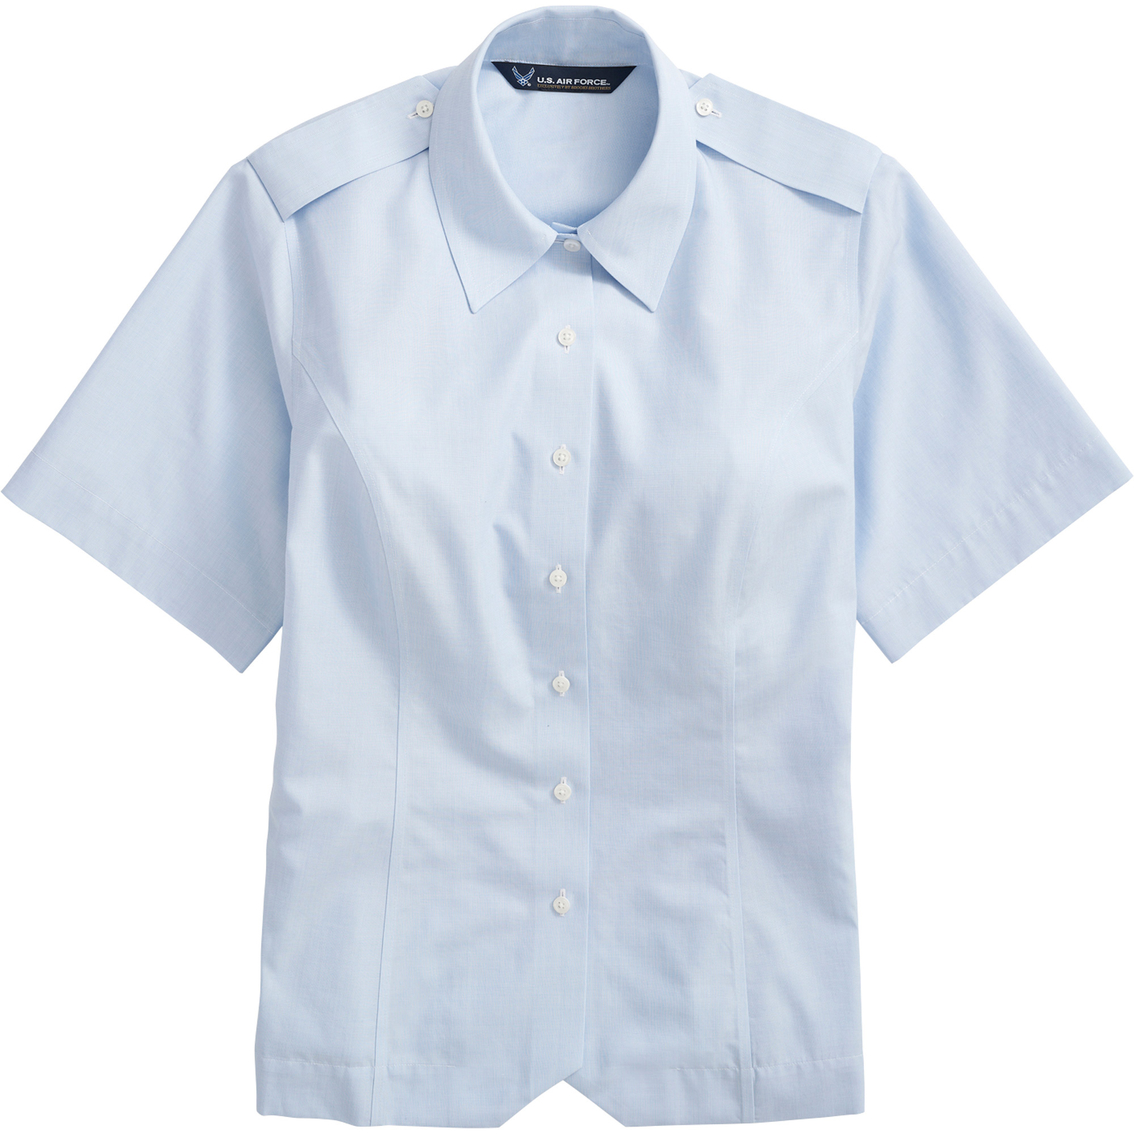 Brooks Brothers Premier Dress Shirt - Image 3 of 6